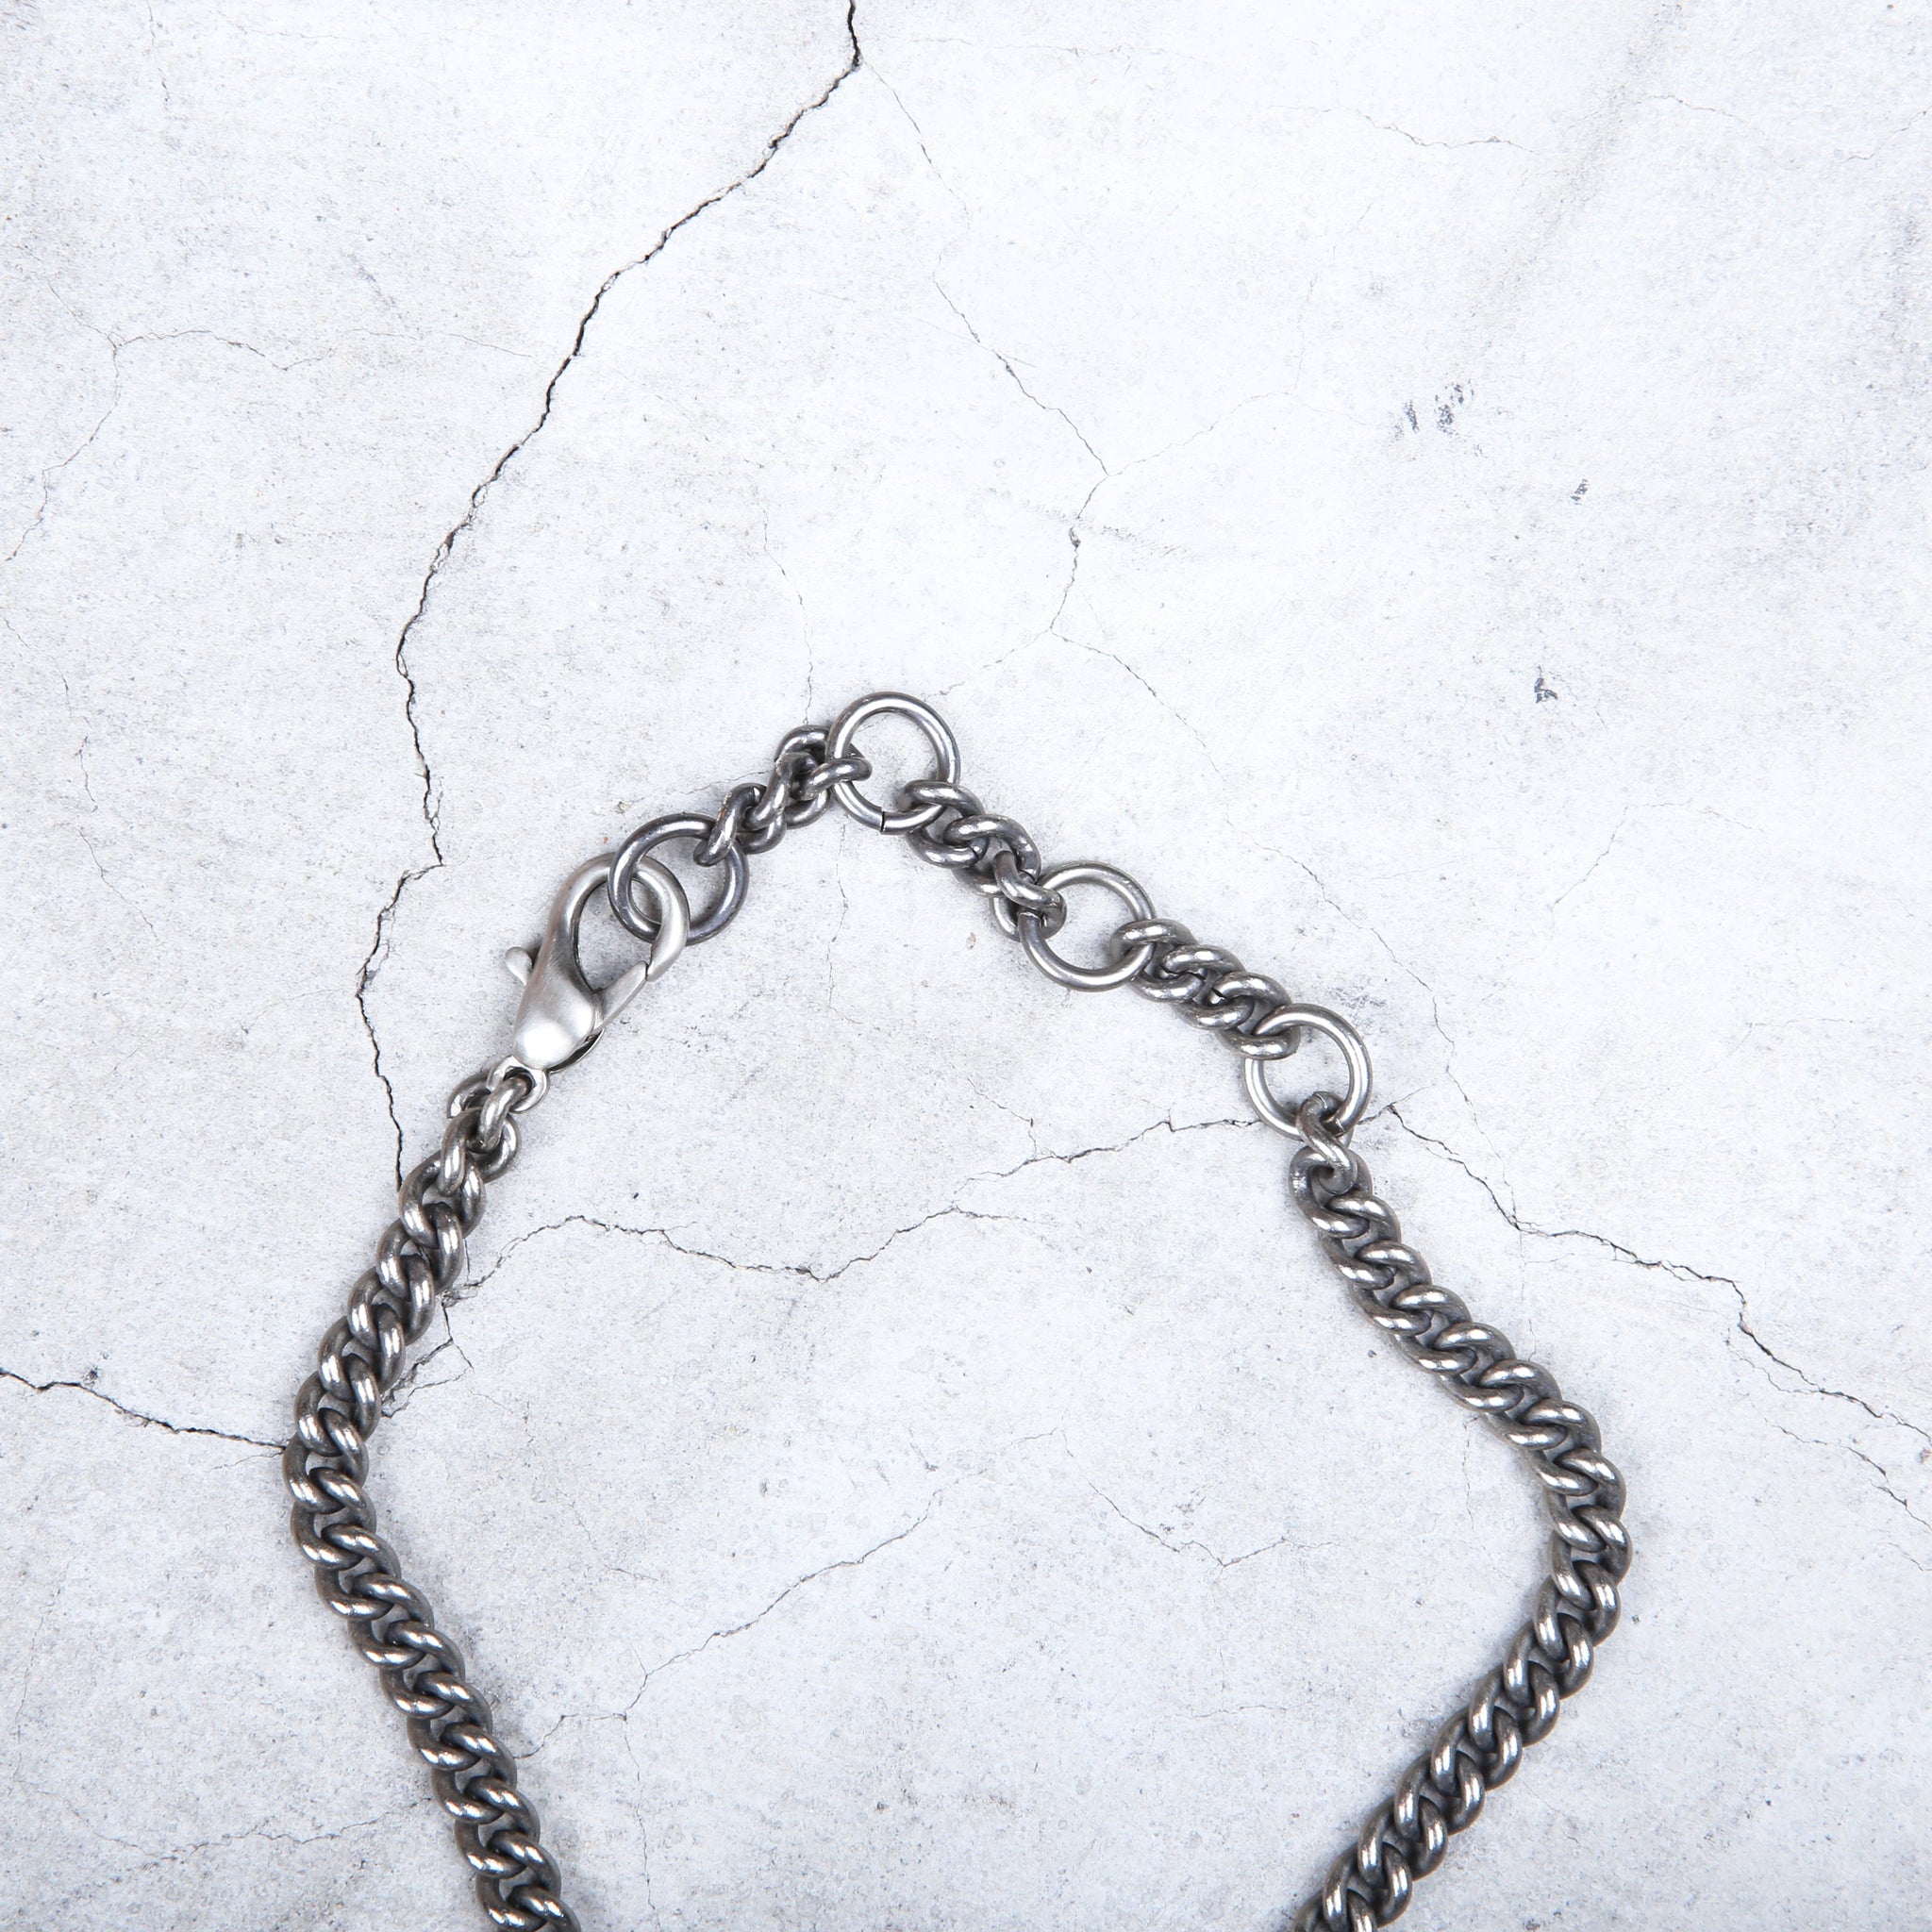 Dirk Bikkembergs Metal Tie Holder Chain